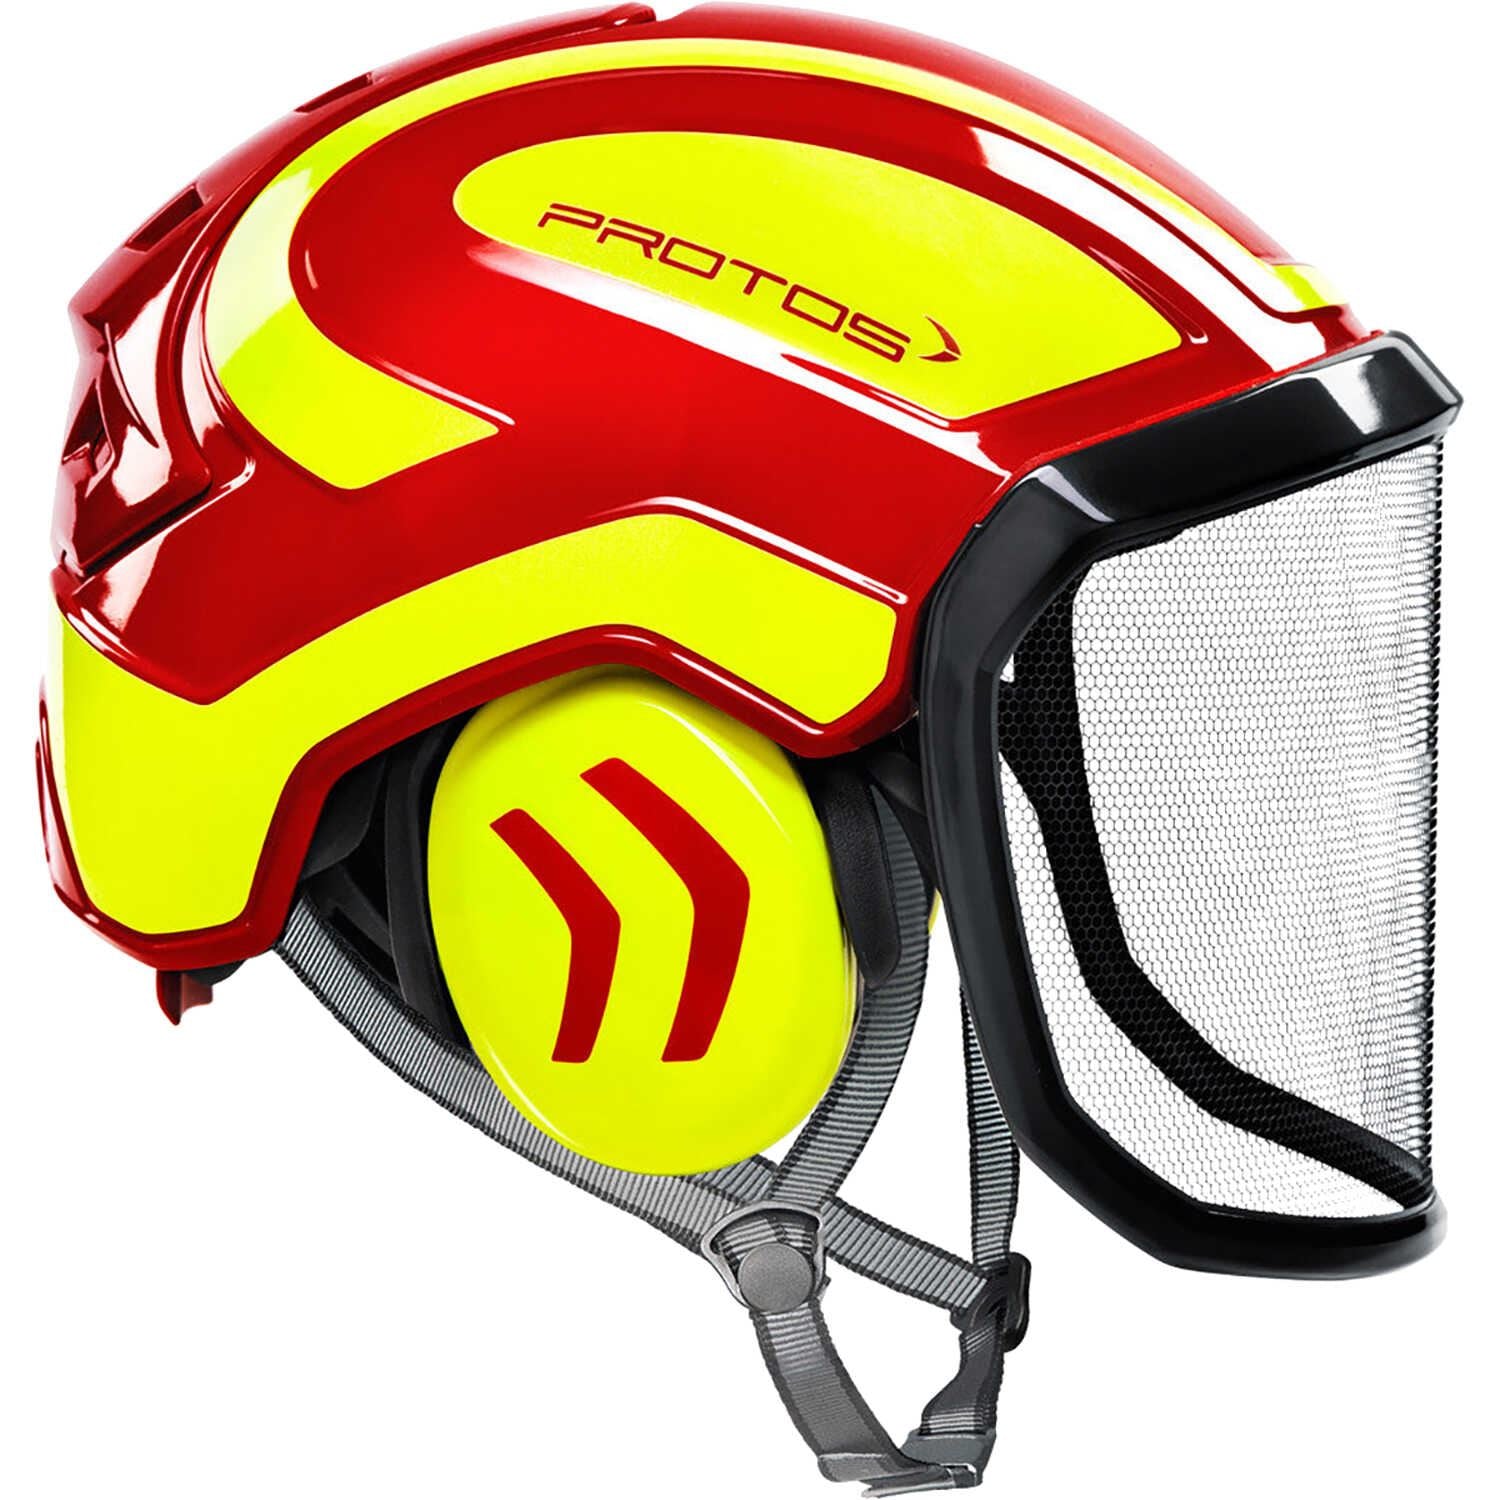 Pfanner PROTOS-RY Protos Helmet, Red/Yellow